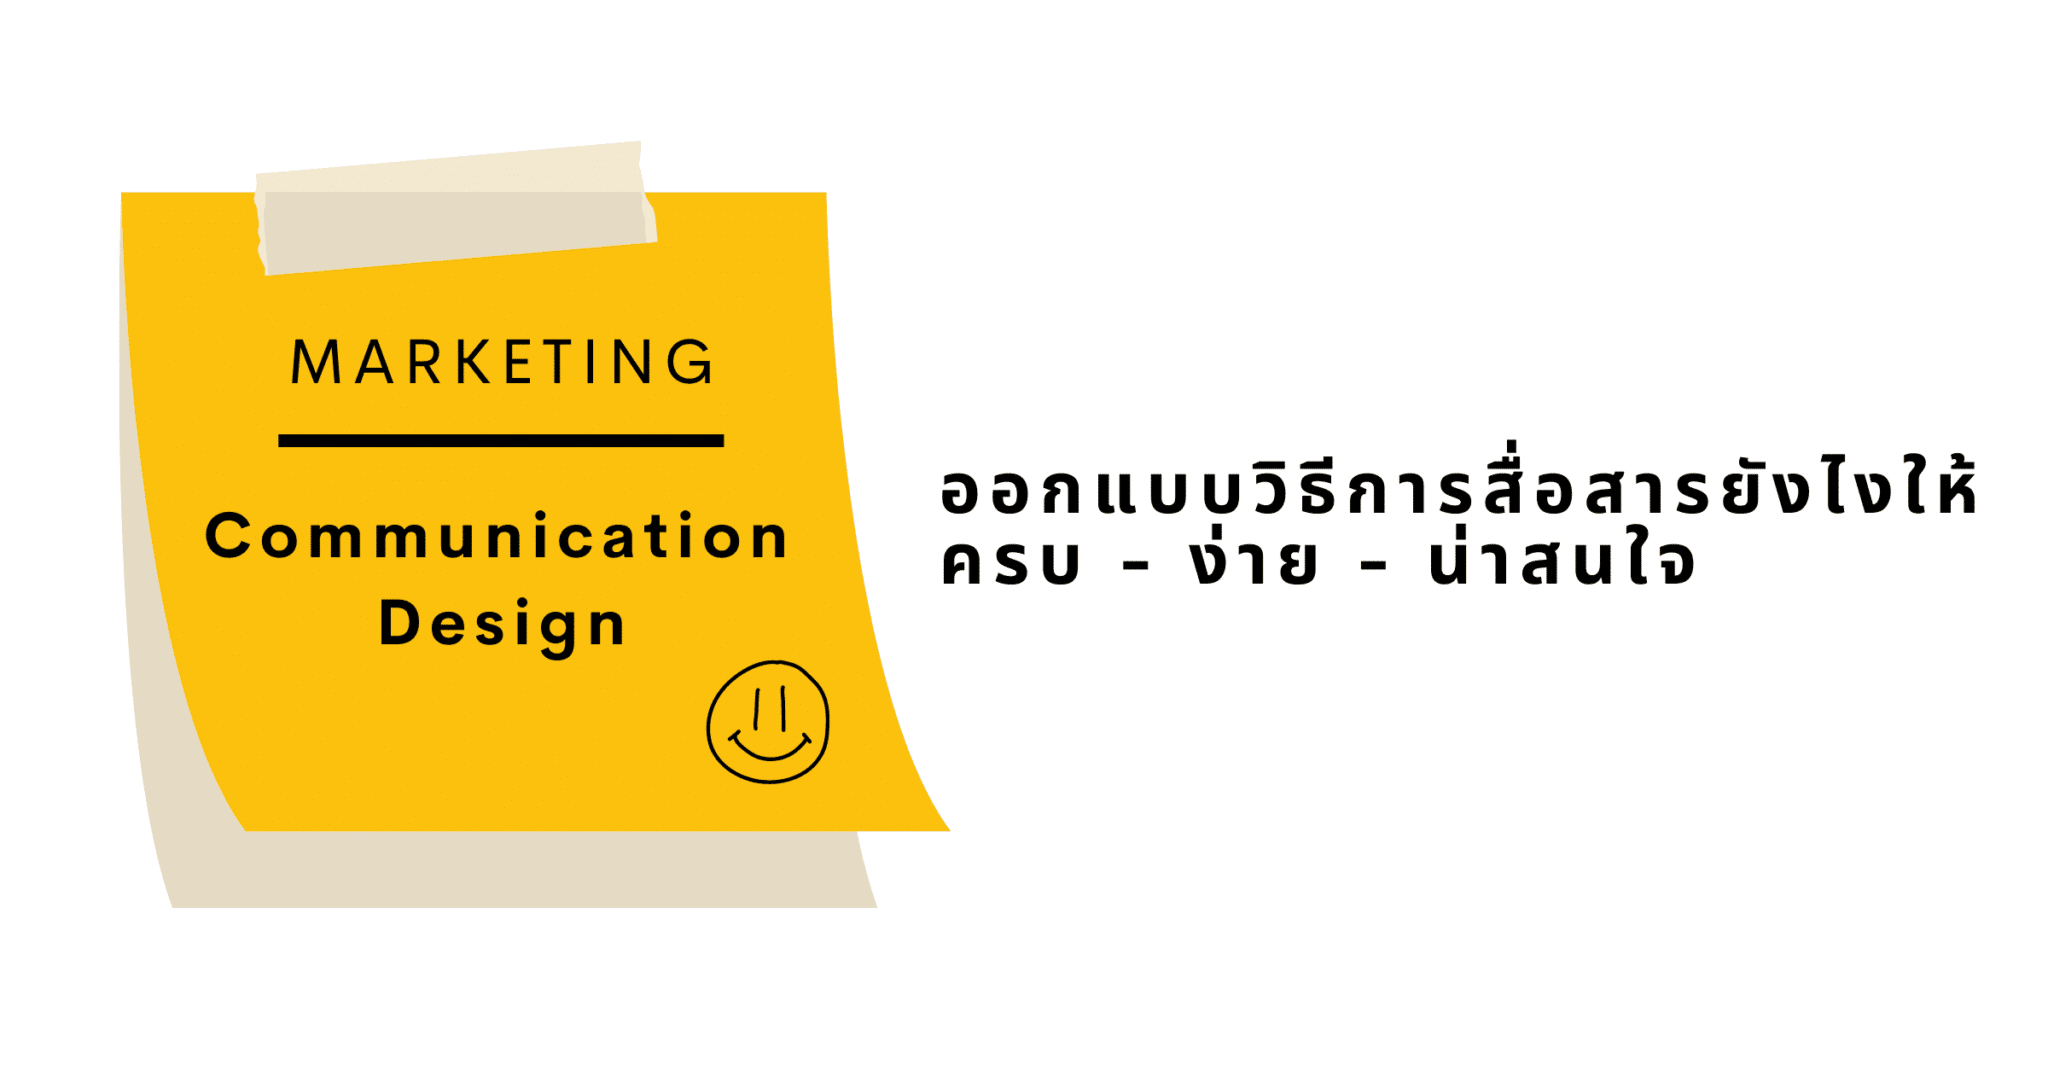 Marketing Communication Design การทำการตลาดที่ดีไม่ใช่แค่ How To Say